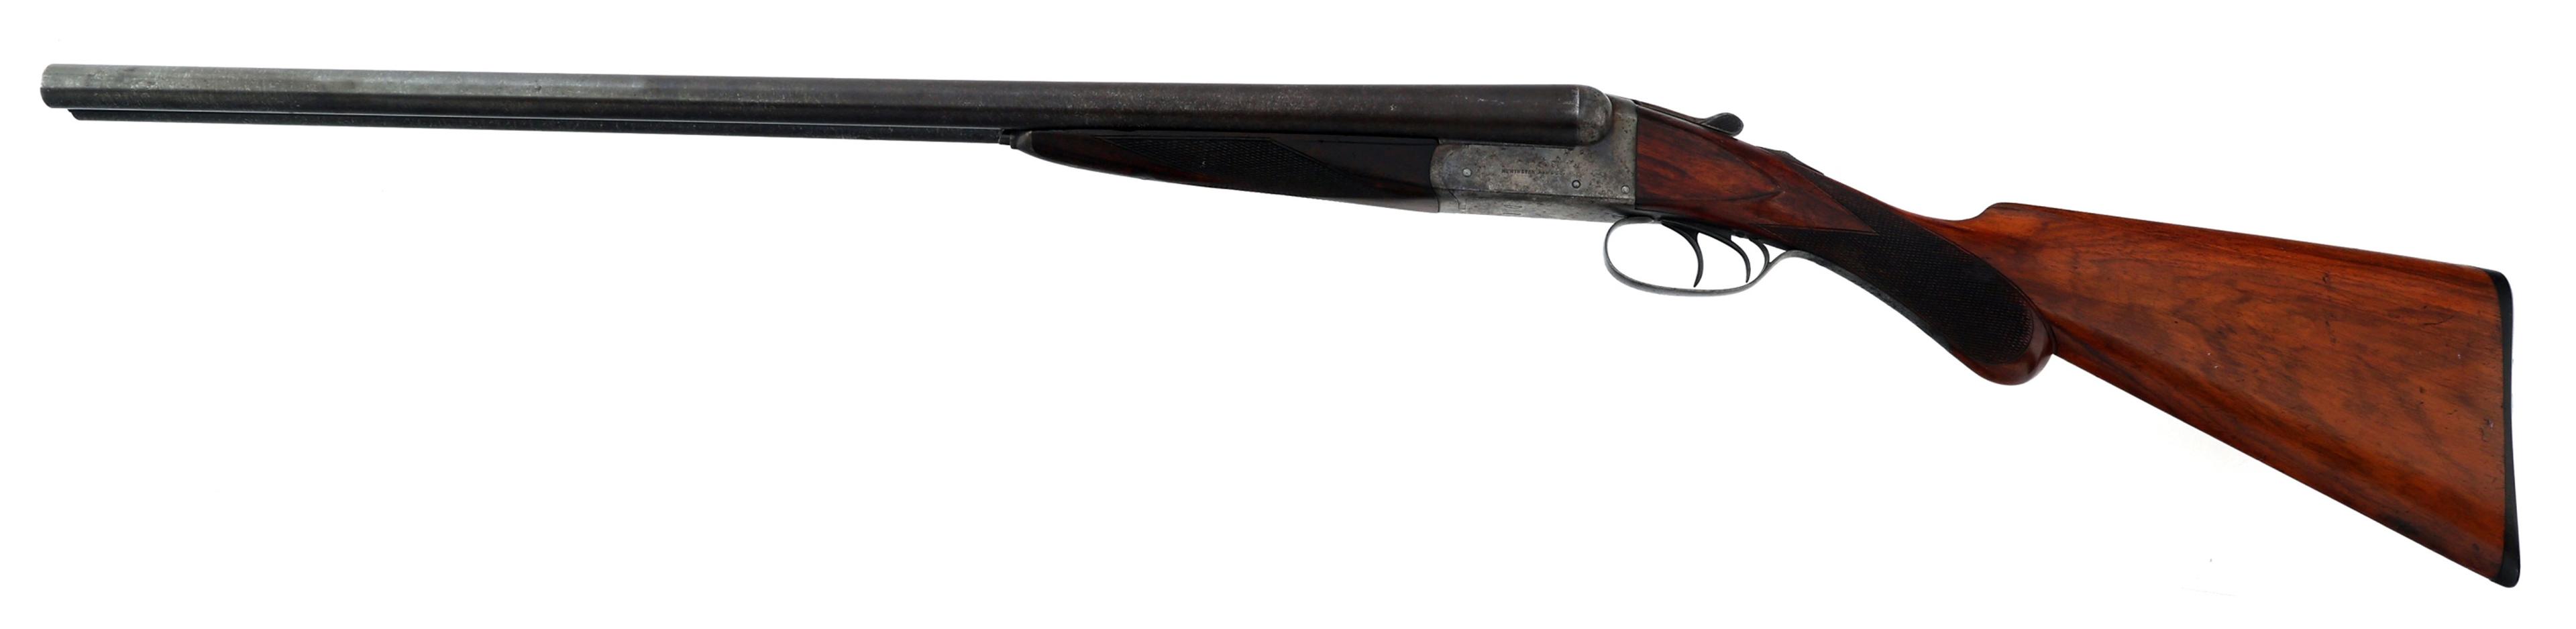 1898 REMINGTON MODEL 1894 GRADE A 12 GAUGE SHOTGUN